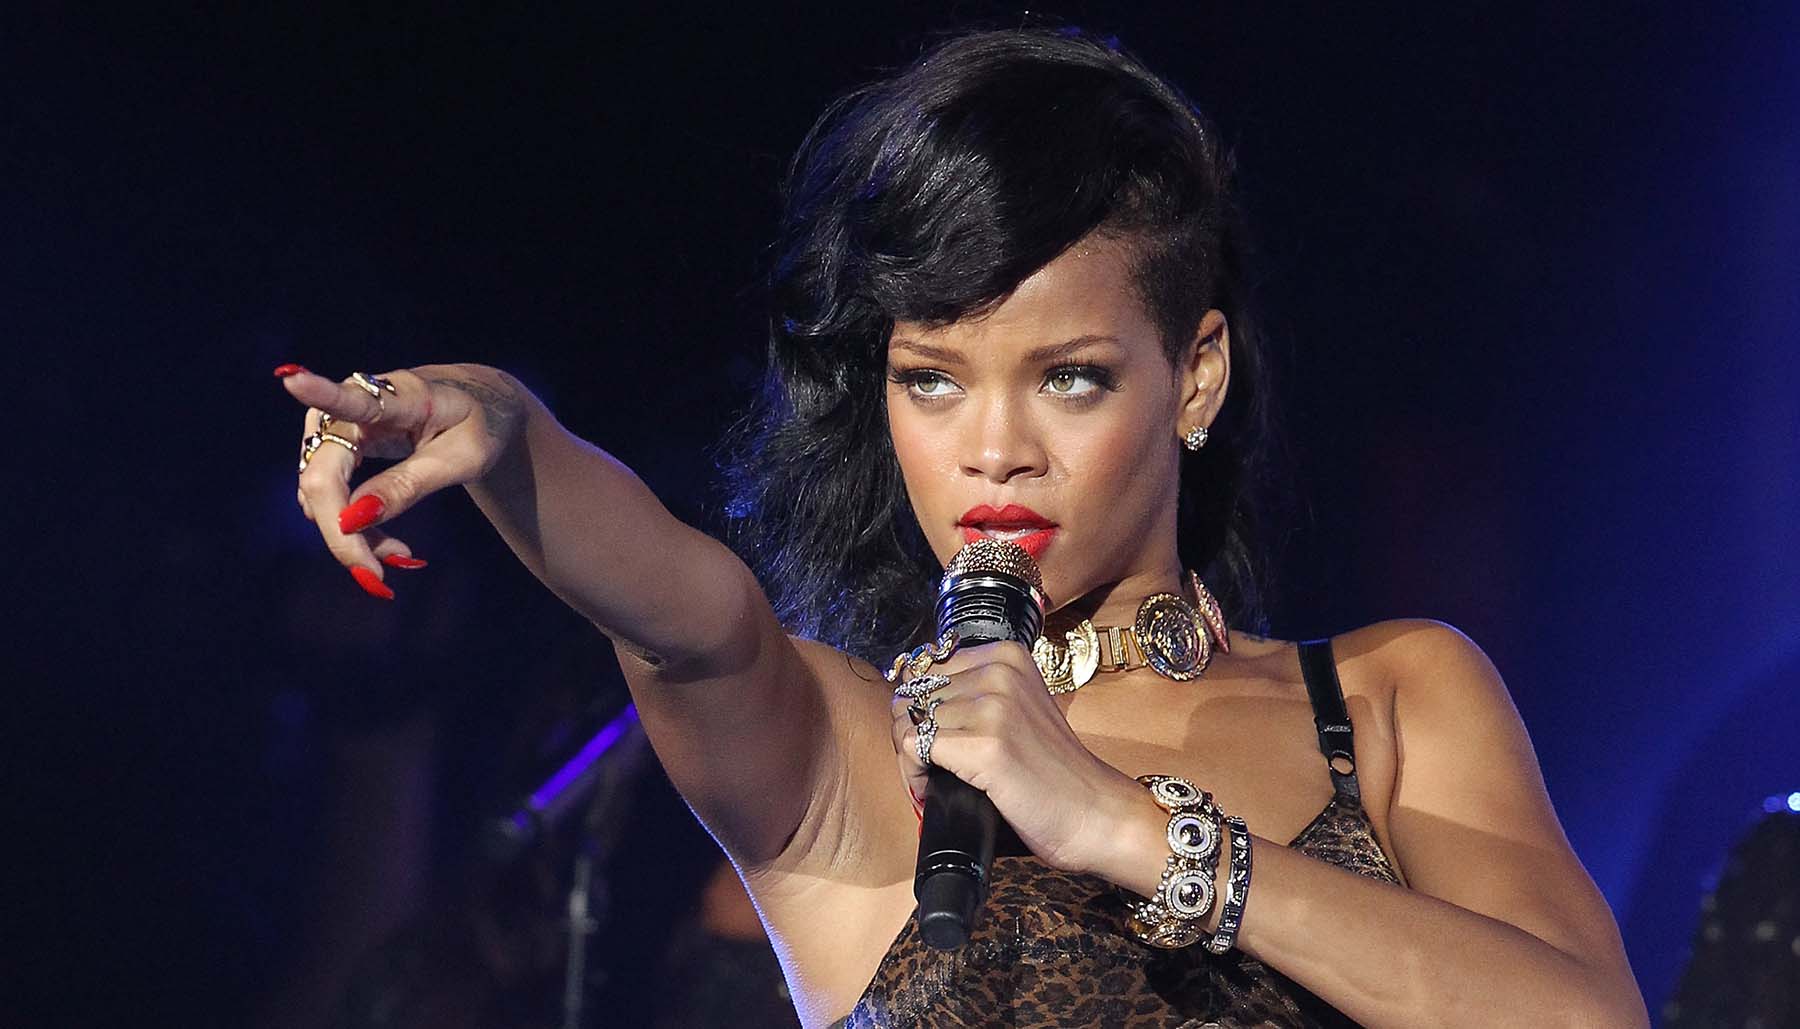 Major Change to Pro Bowl, Rihanna To Headline 2023 Super Bowl Halftime